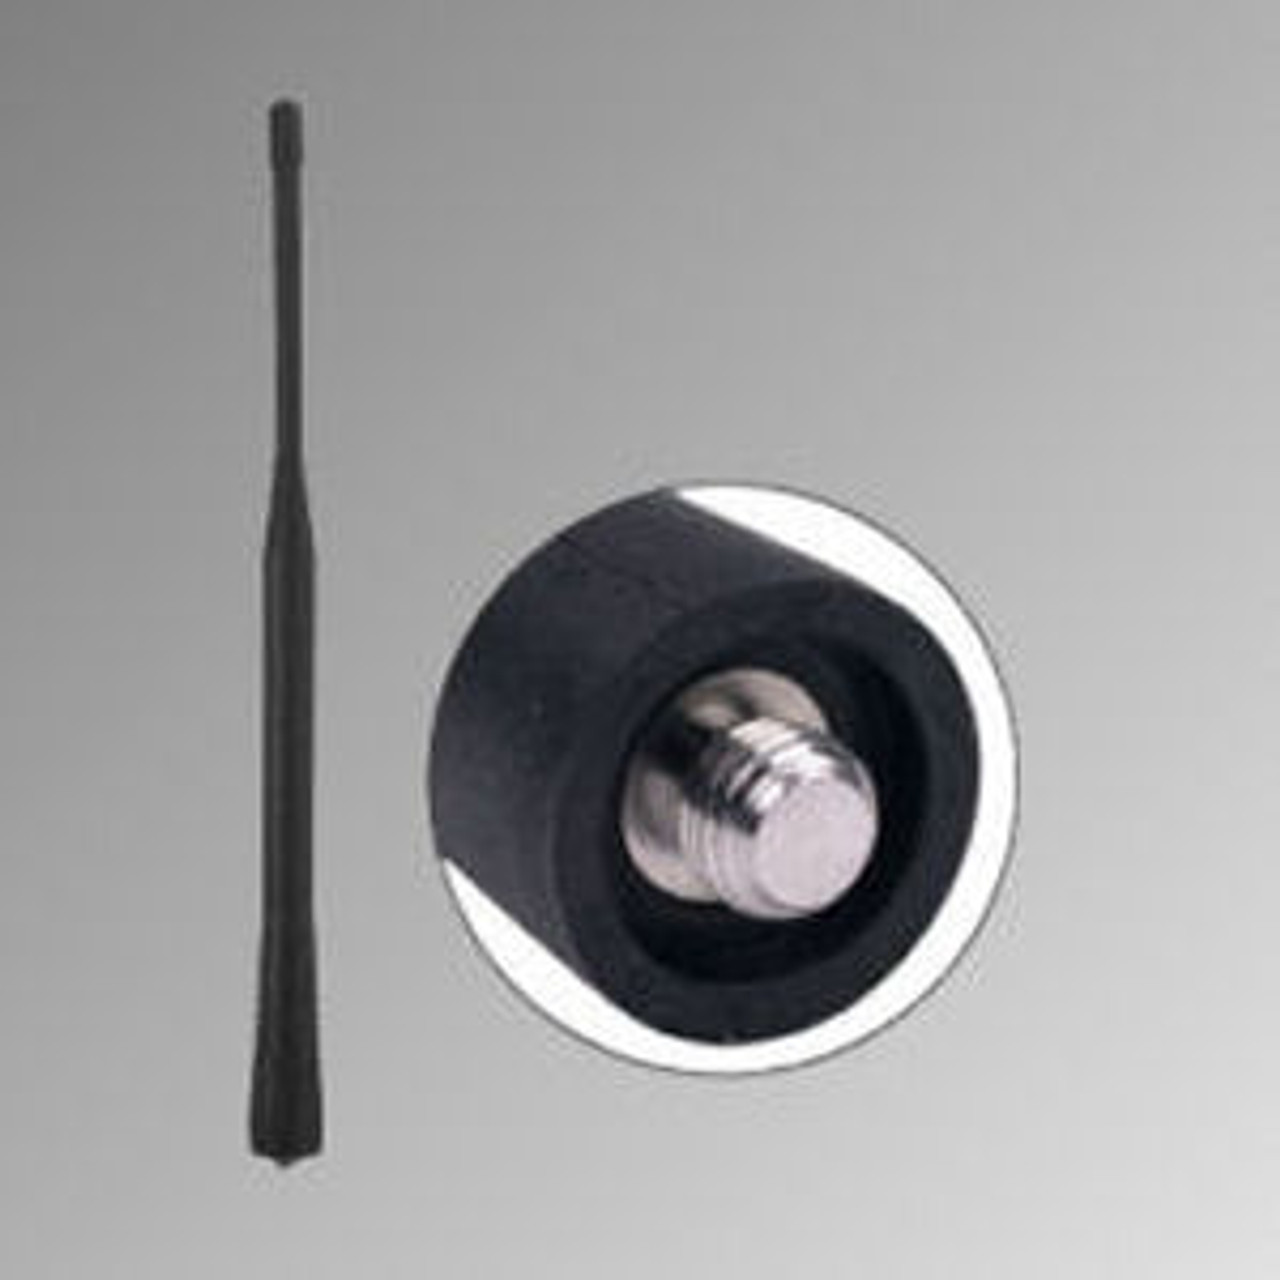 ICOM F3201DEX Long Range Antenna - 10.5", VHF, 155-165 MHz